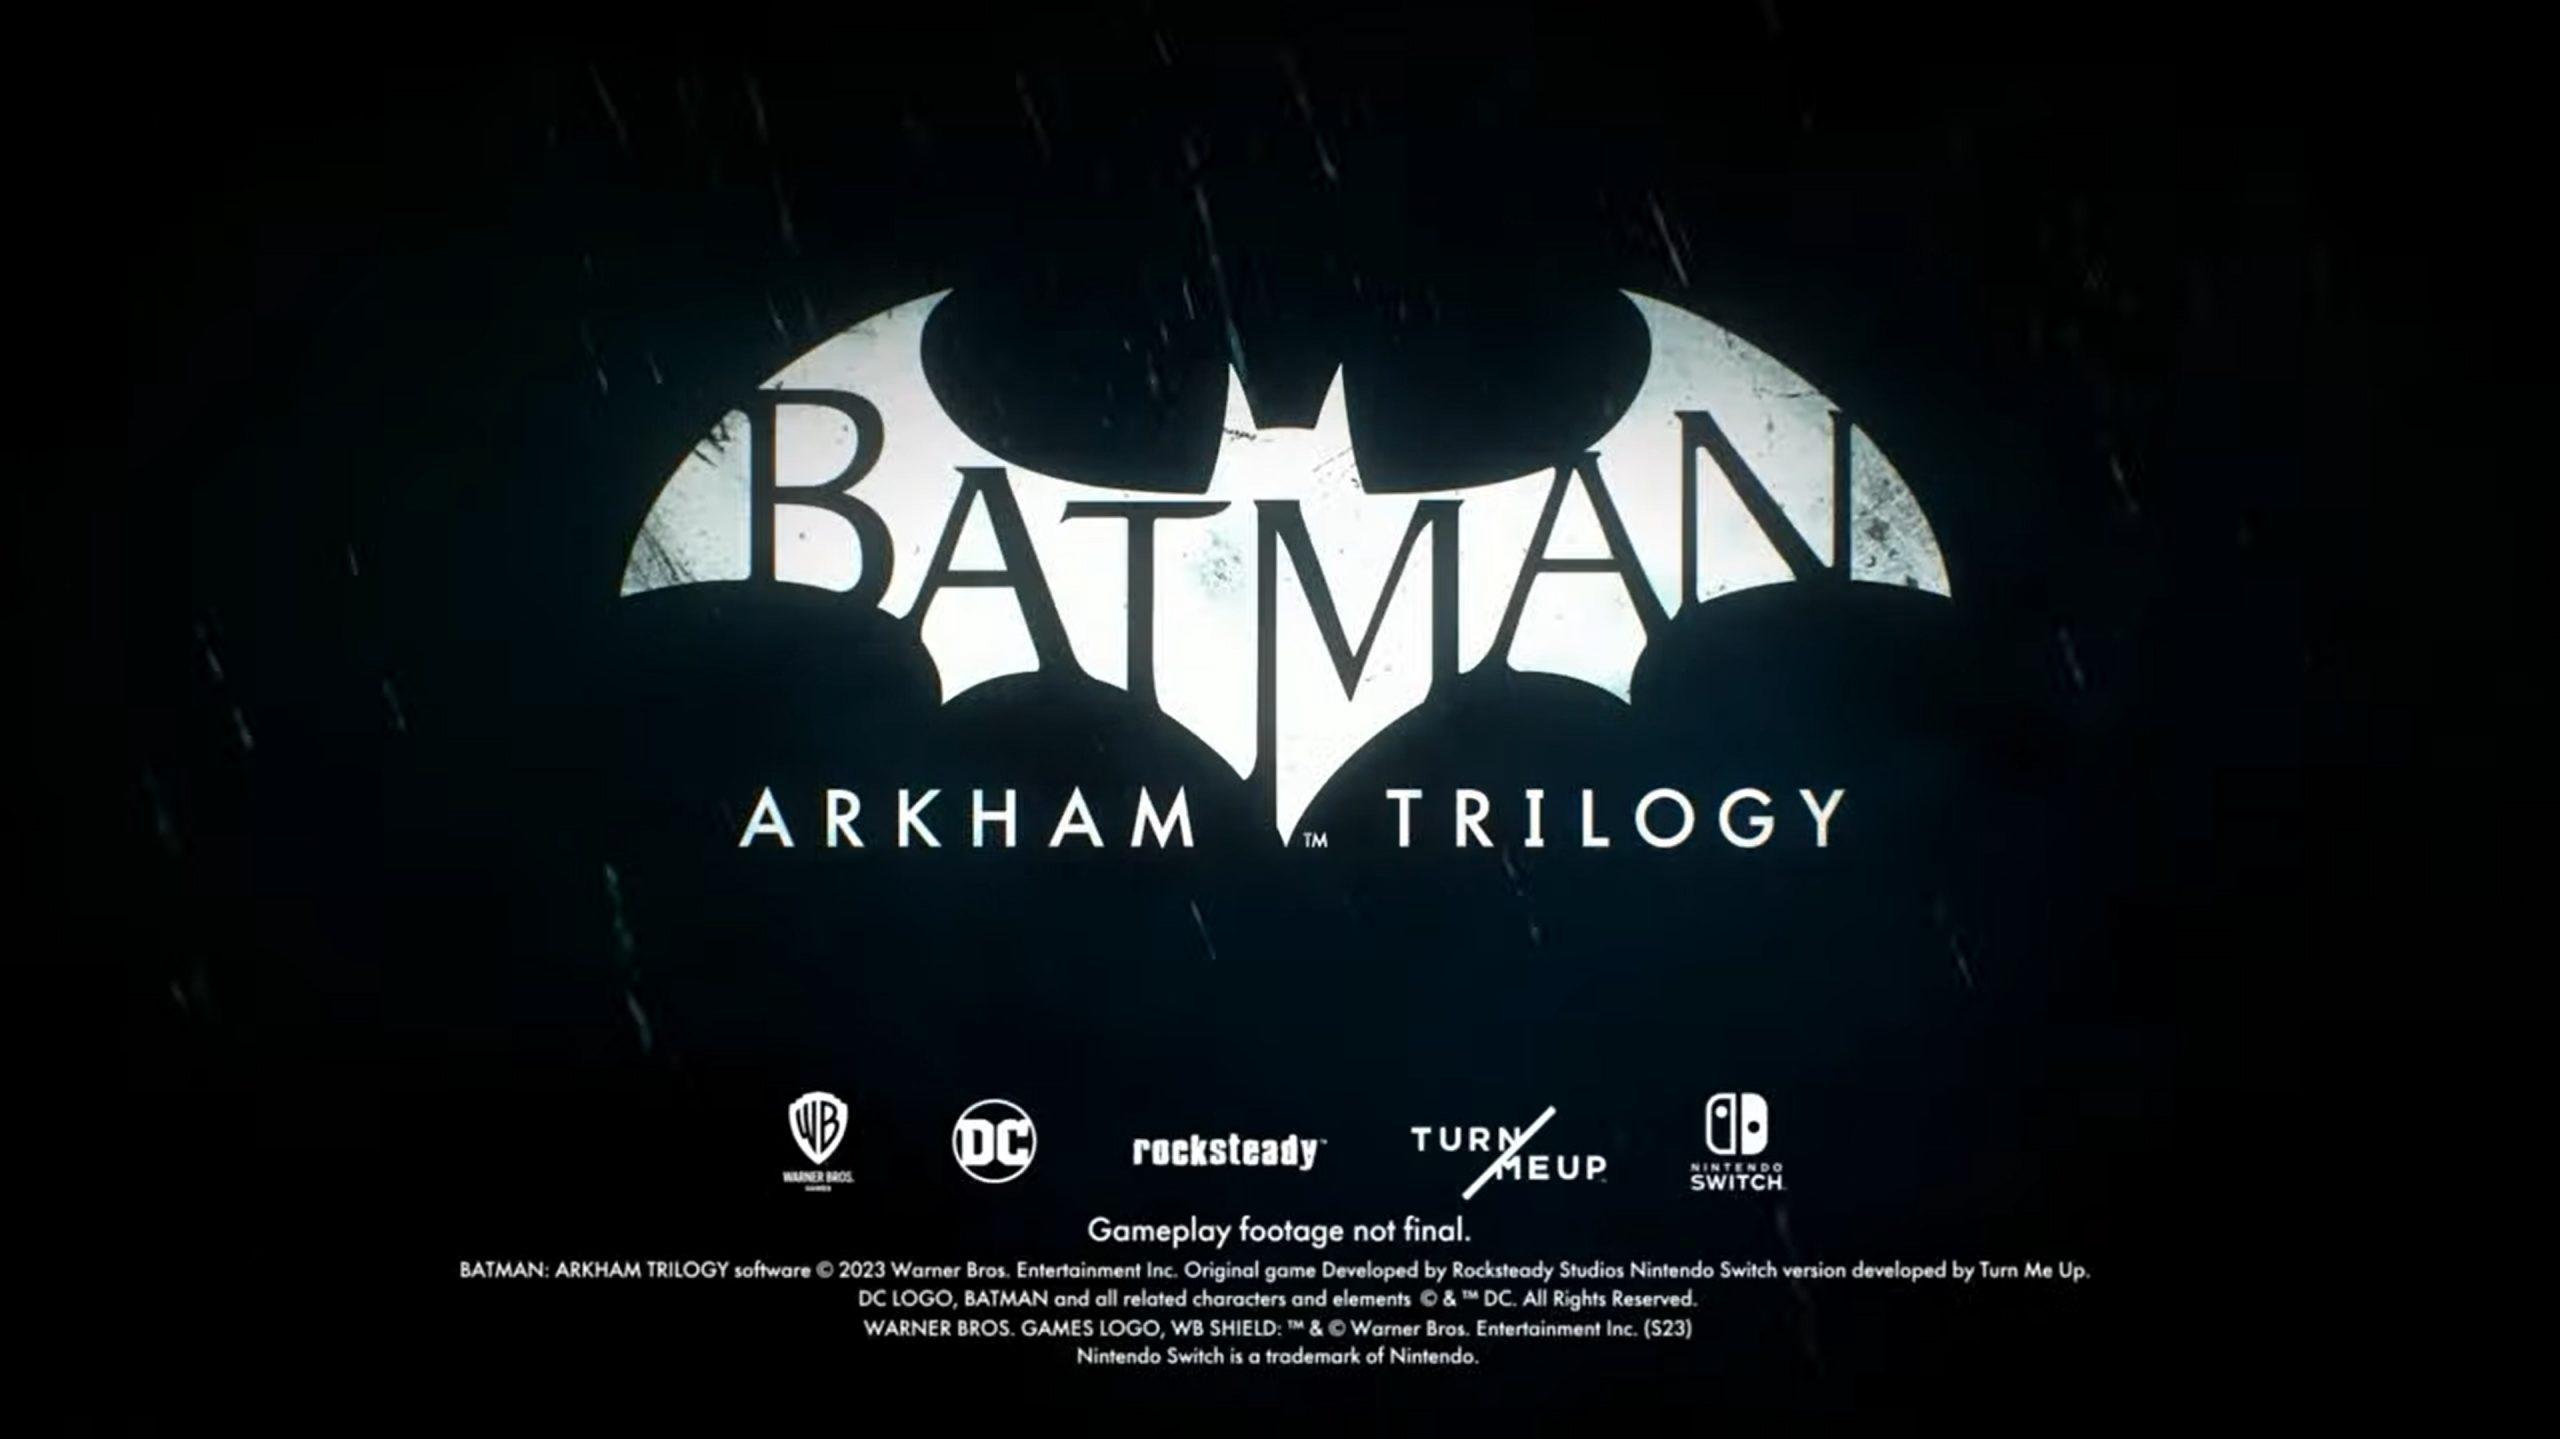 Batman Arkham Trilogy confirmed for Switch